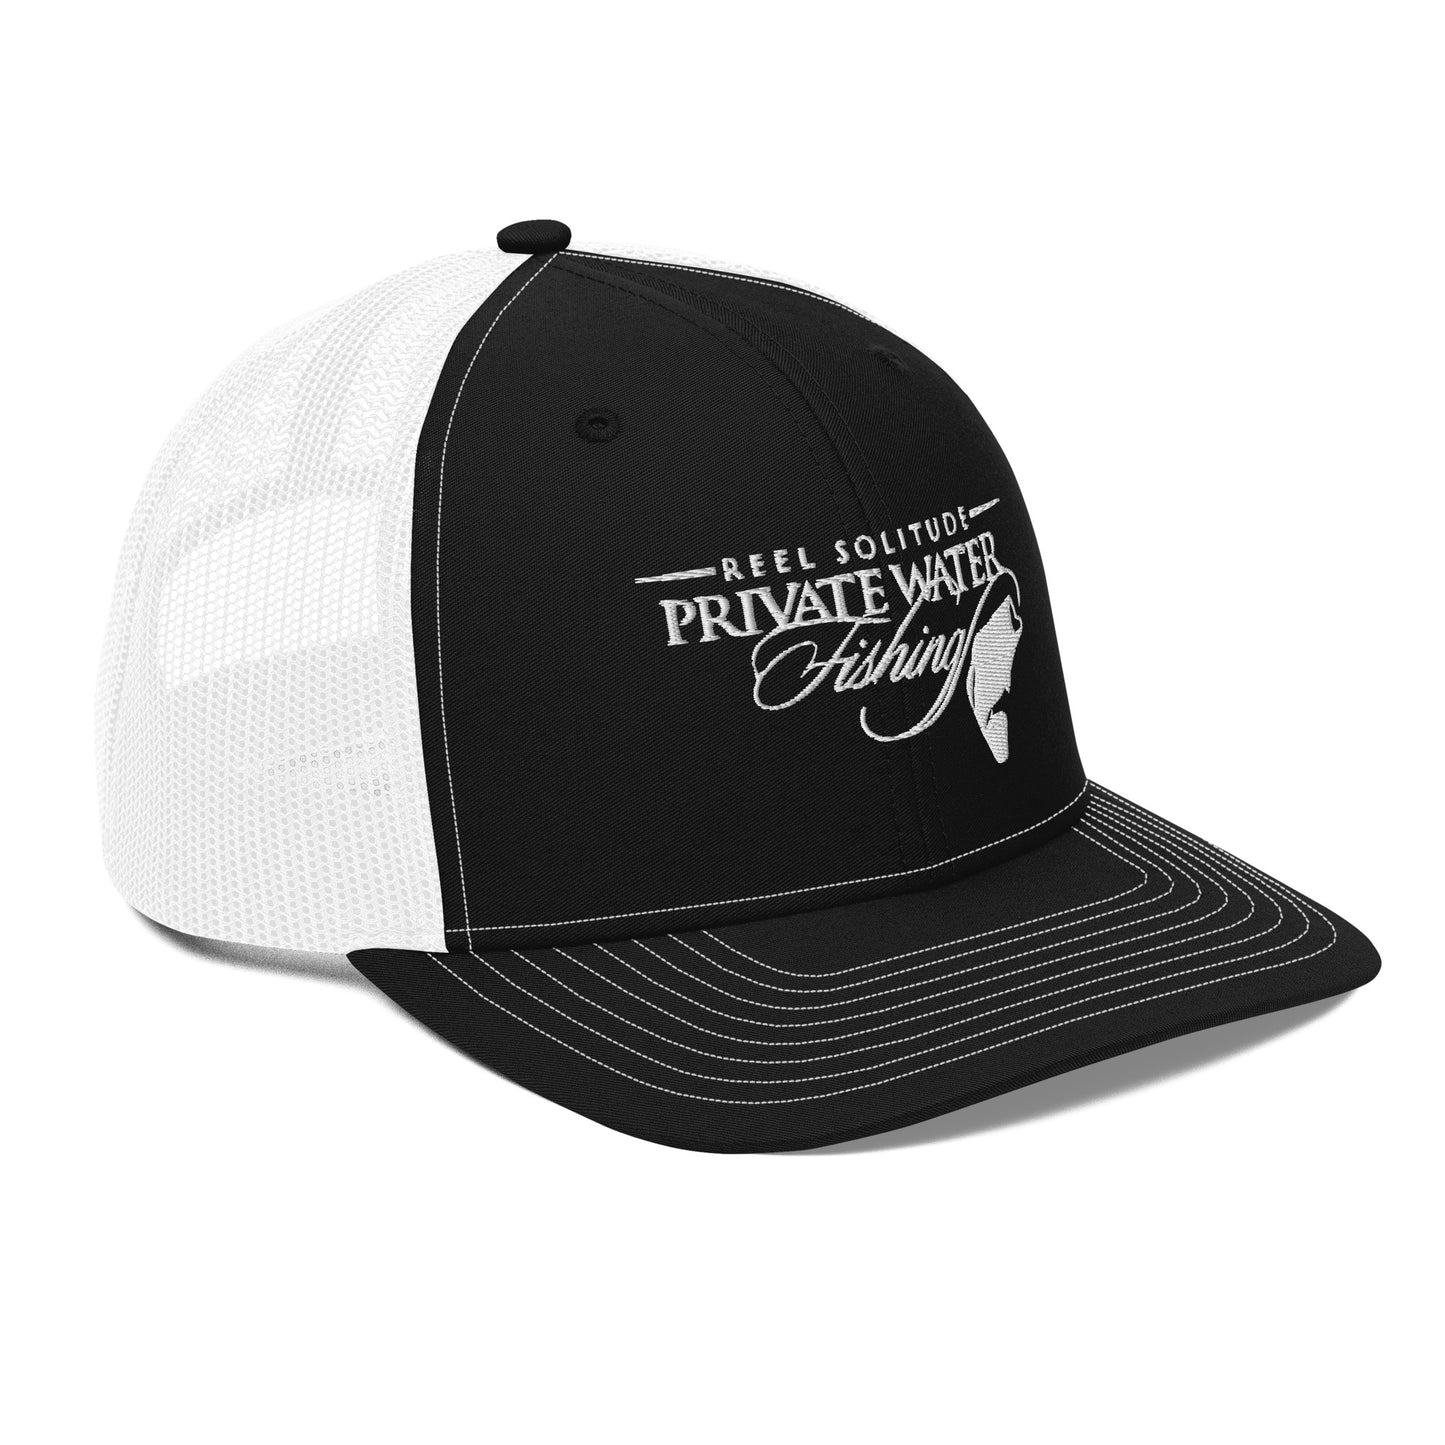 PWF Pro Angler Hat